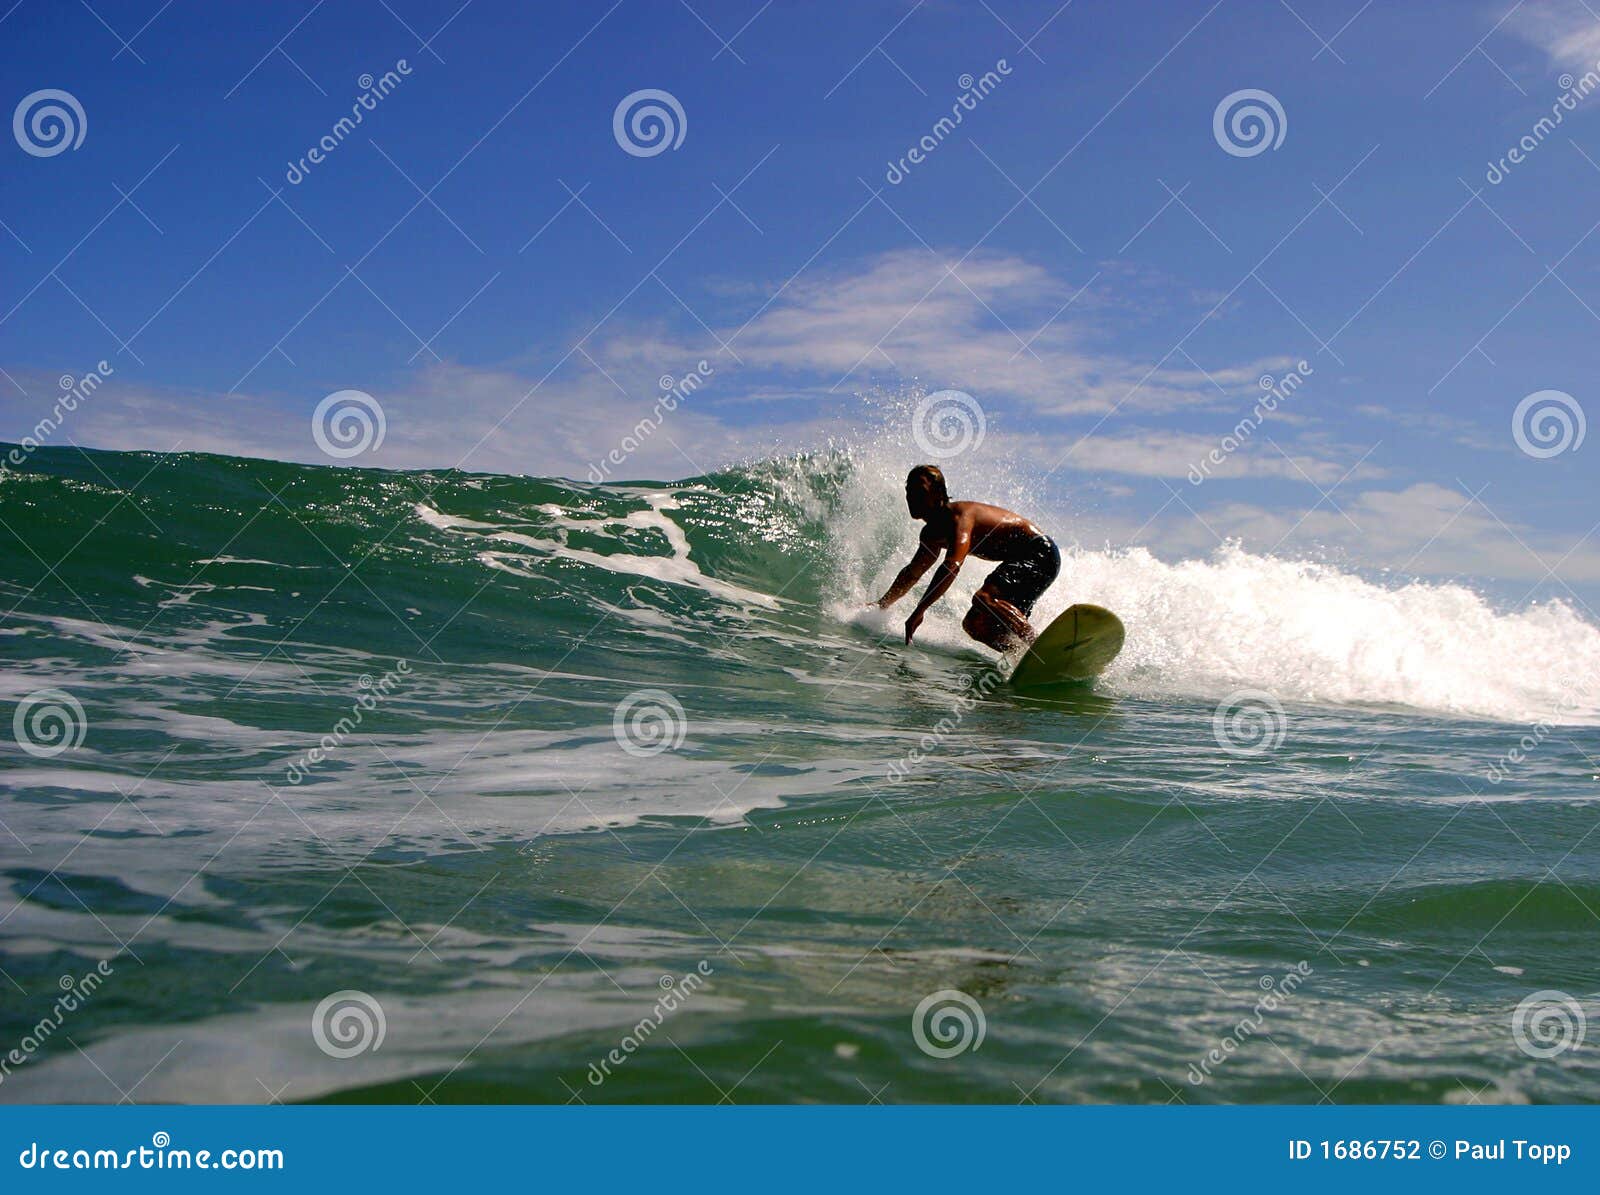 costa rica surfer surfing at puerto viejo